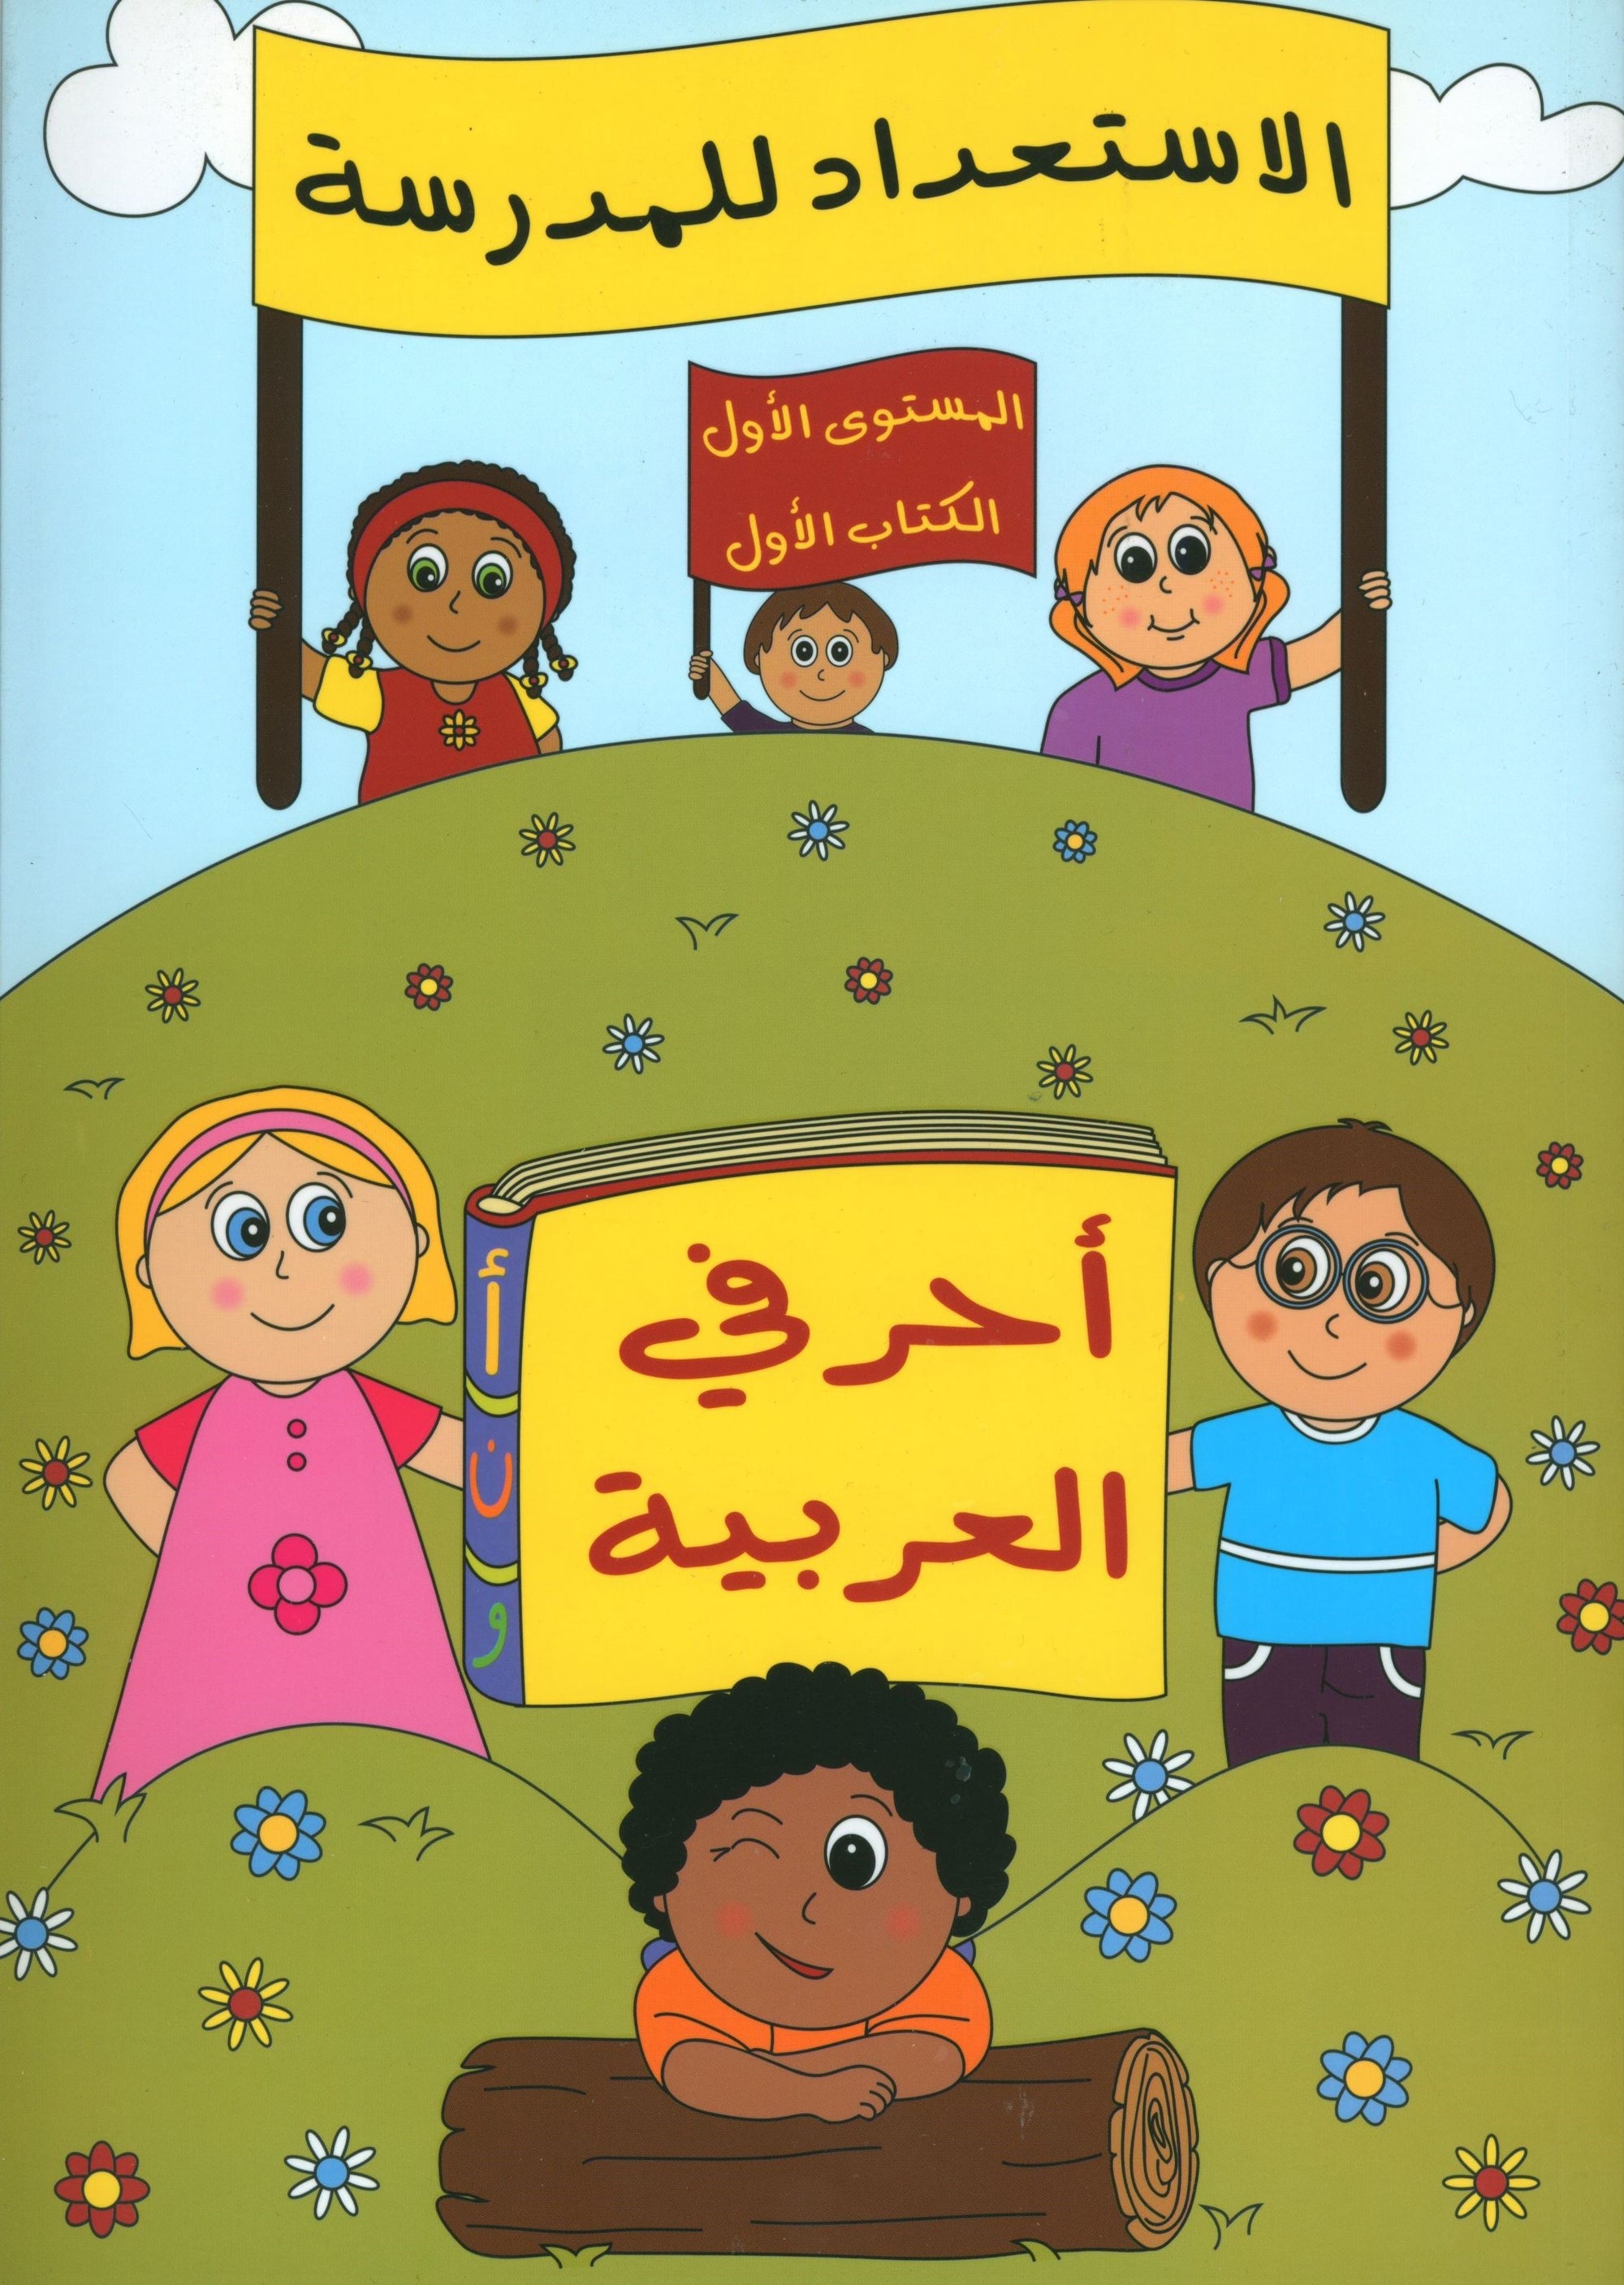 Preparing for School - My Arabic Letters Part 1 الاستعداد للمدرسة - أحرفي العربية